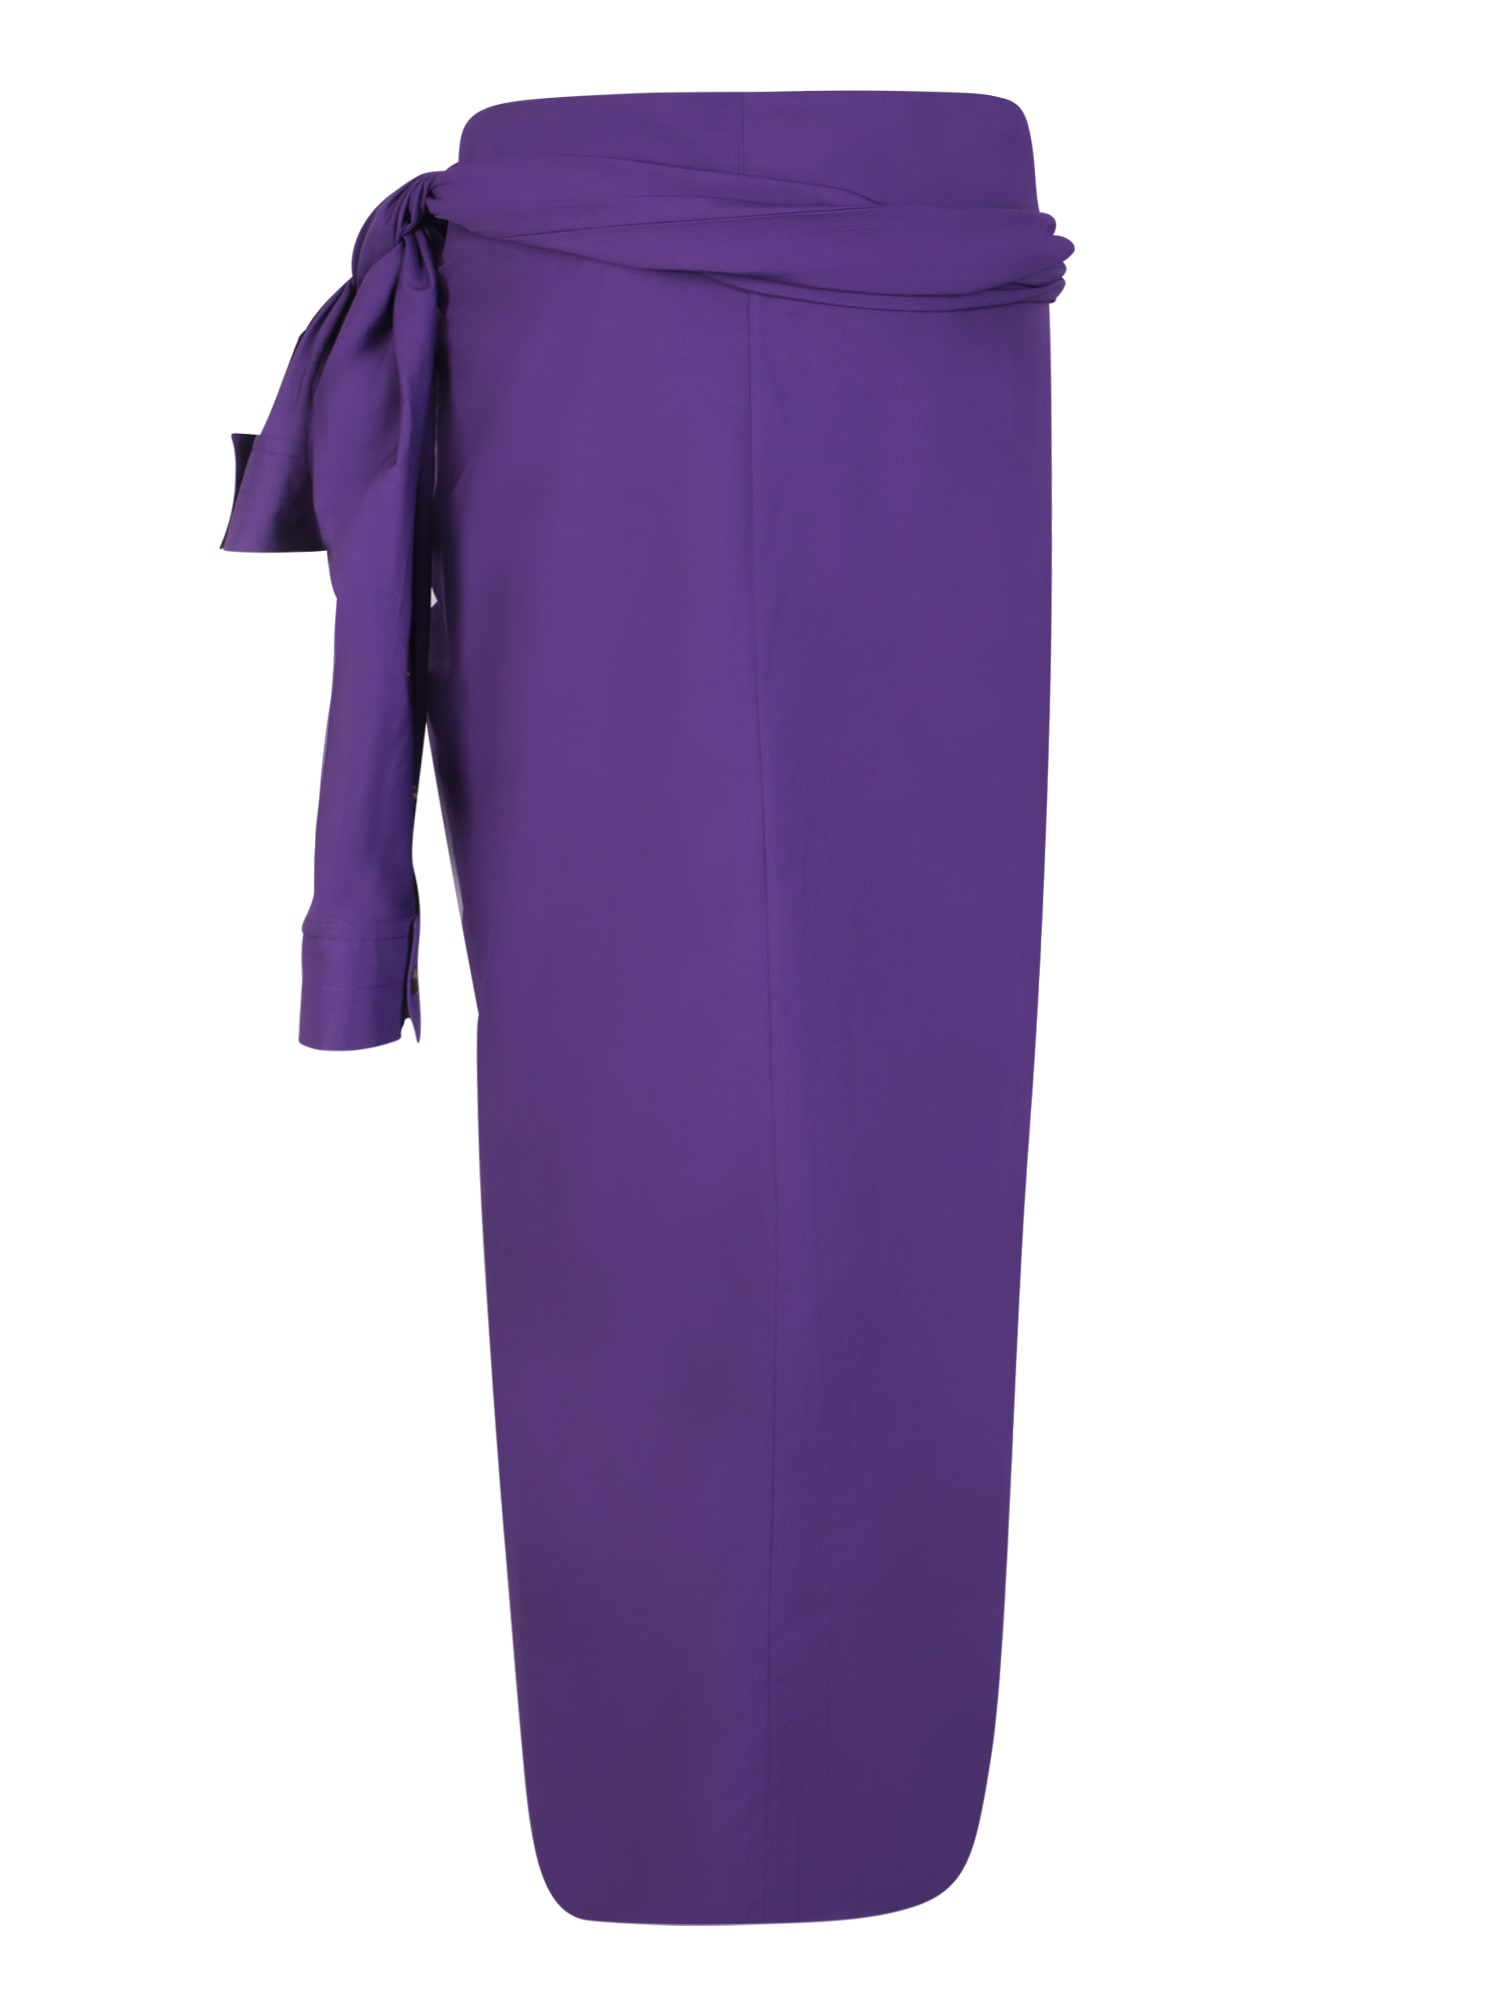 Shop Quira Wrapped Design Purple Skirt